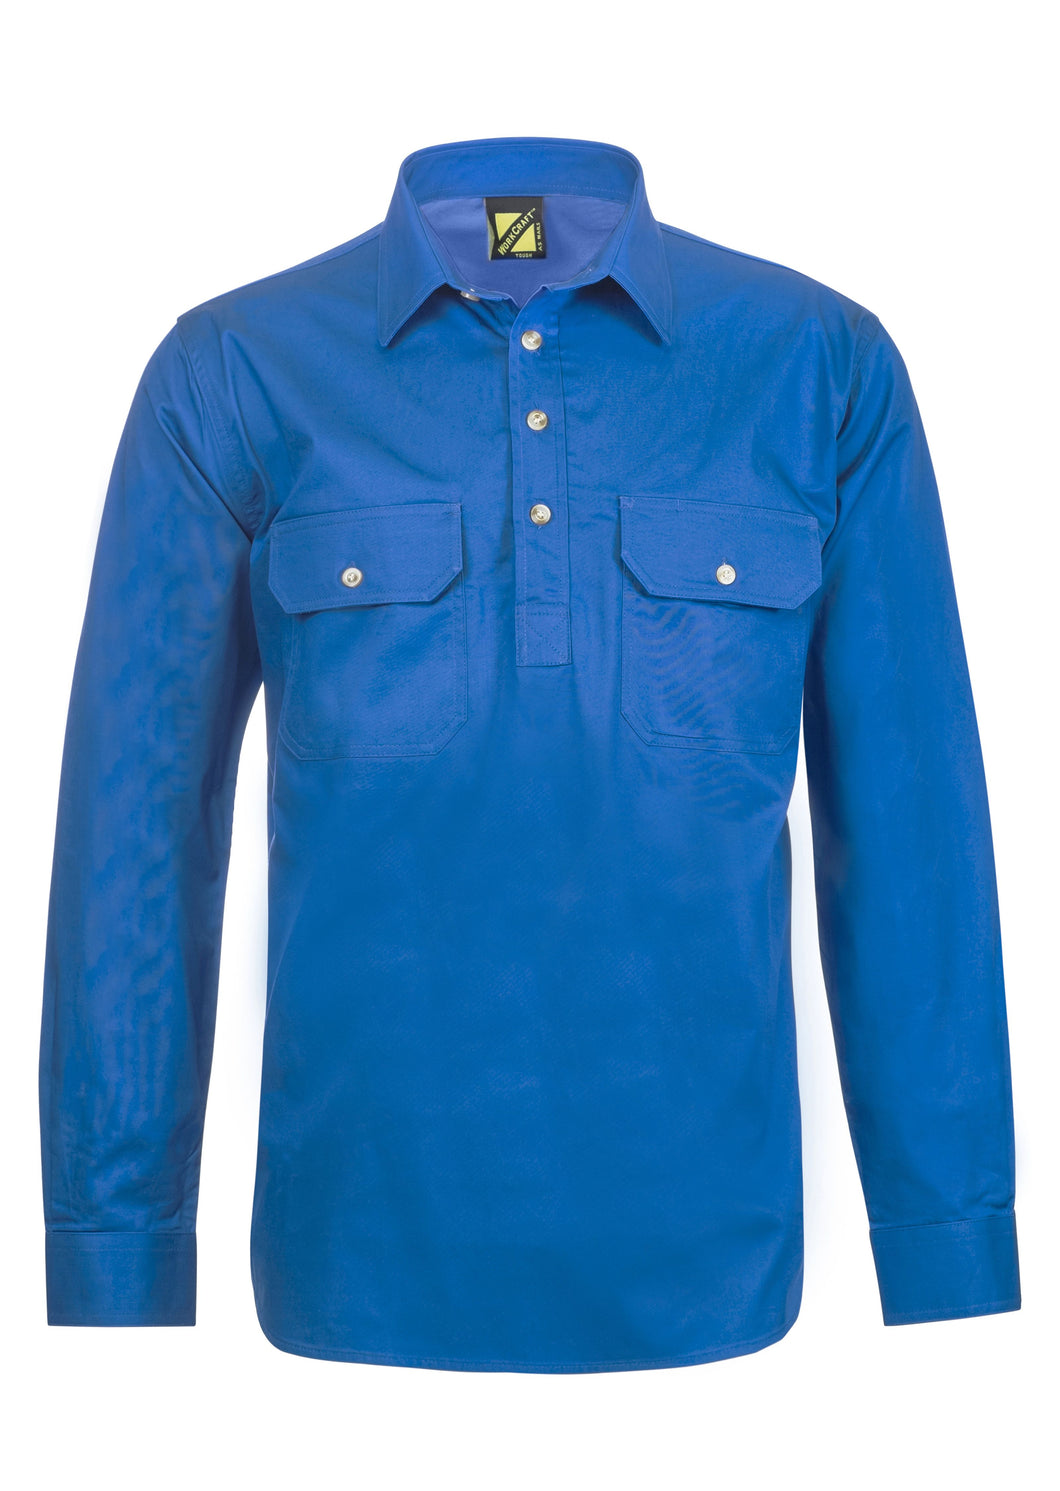 Lightweight Long Sleeve Half Placket Cotton Drill Shirt with Contrast Buttons